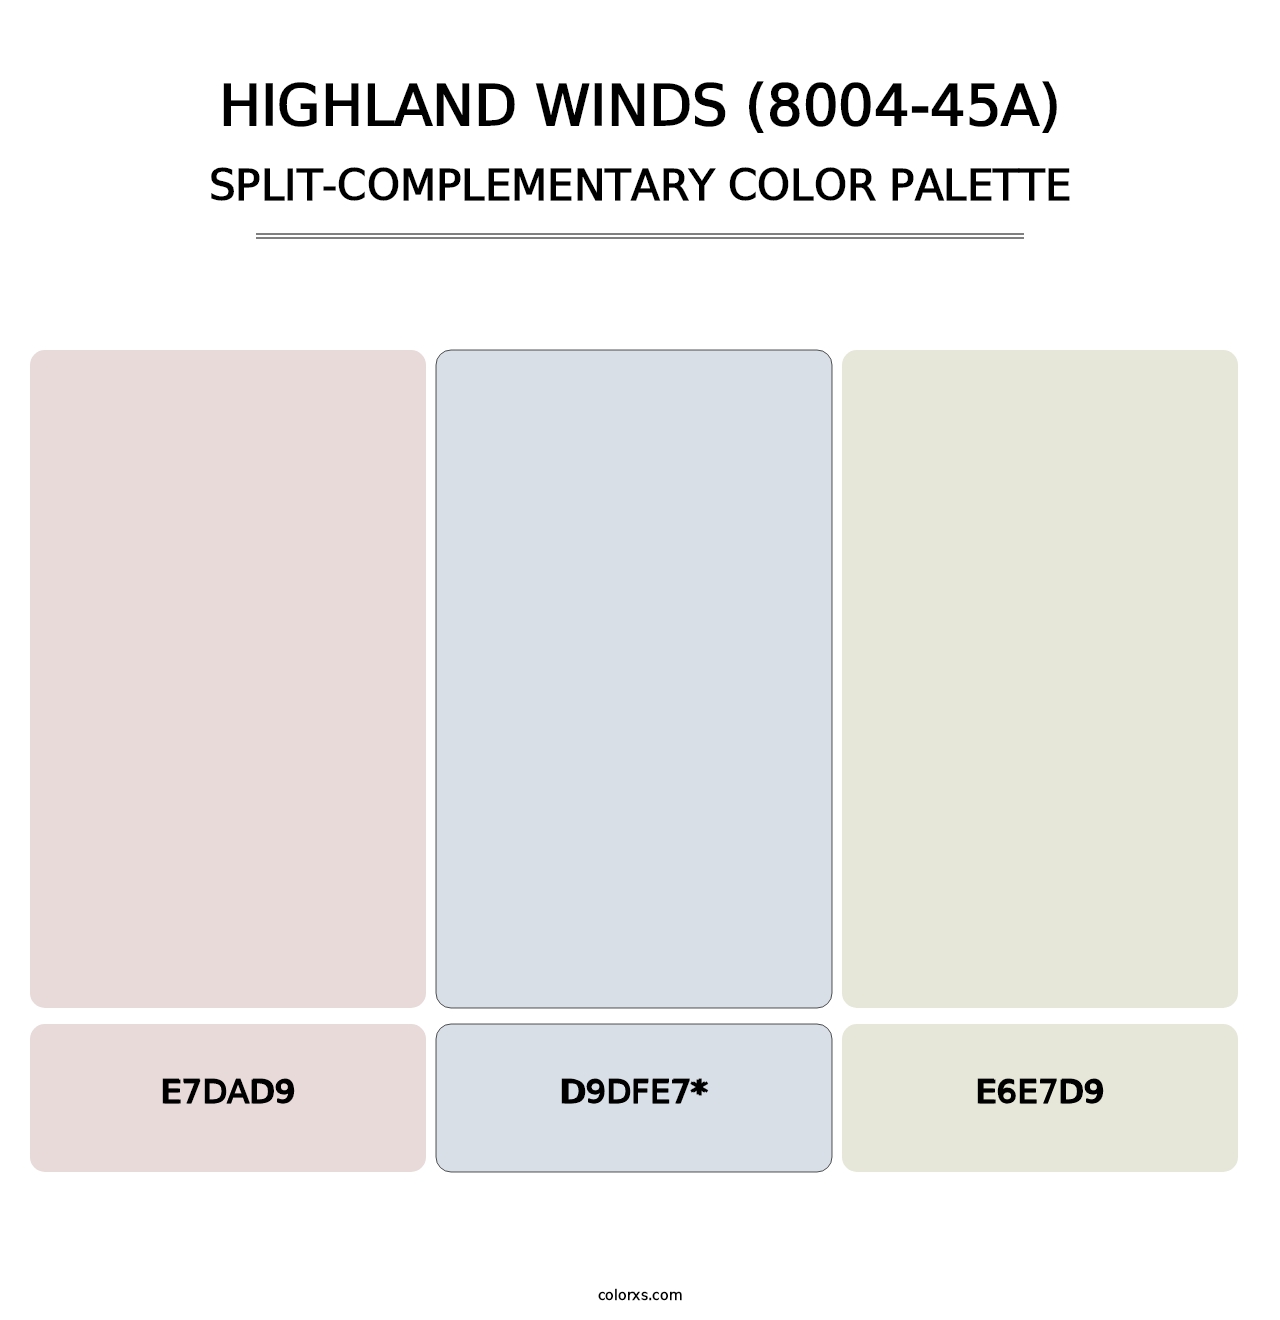 Highland Winds (8004-45A) - Split-Complementary Color Palette